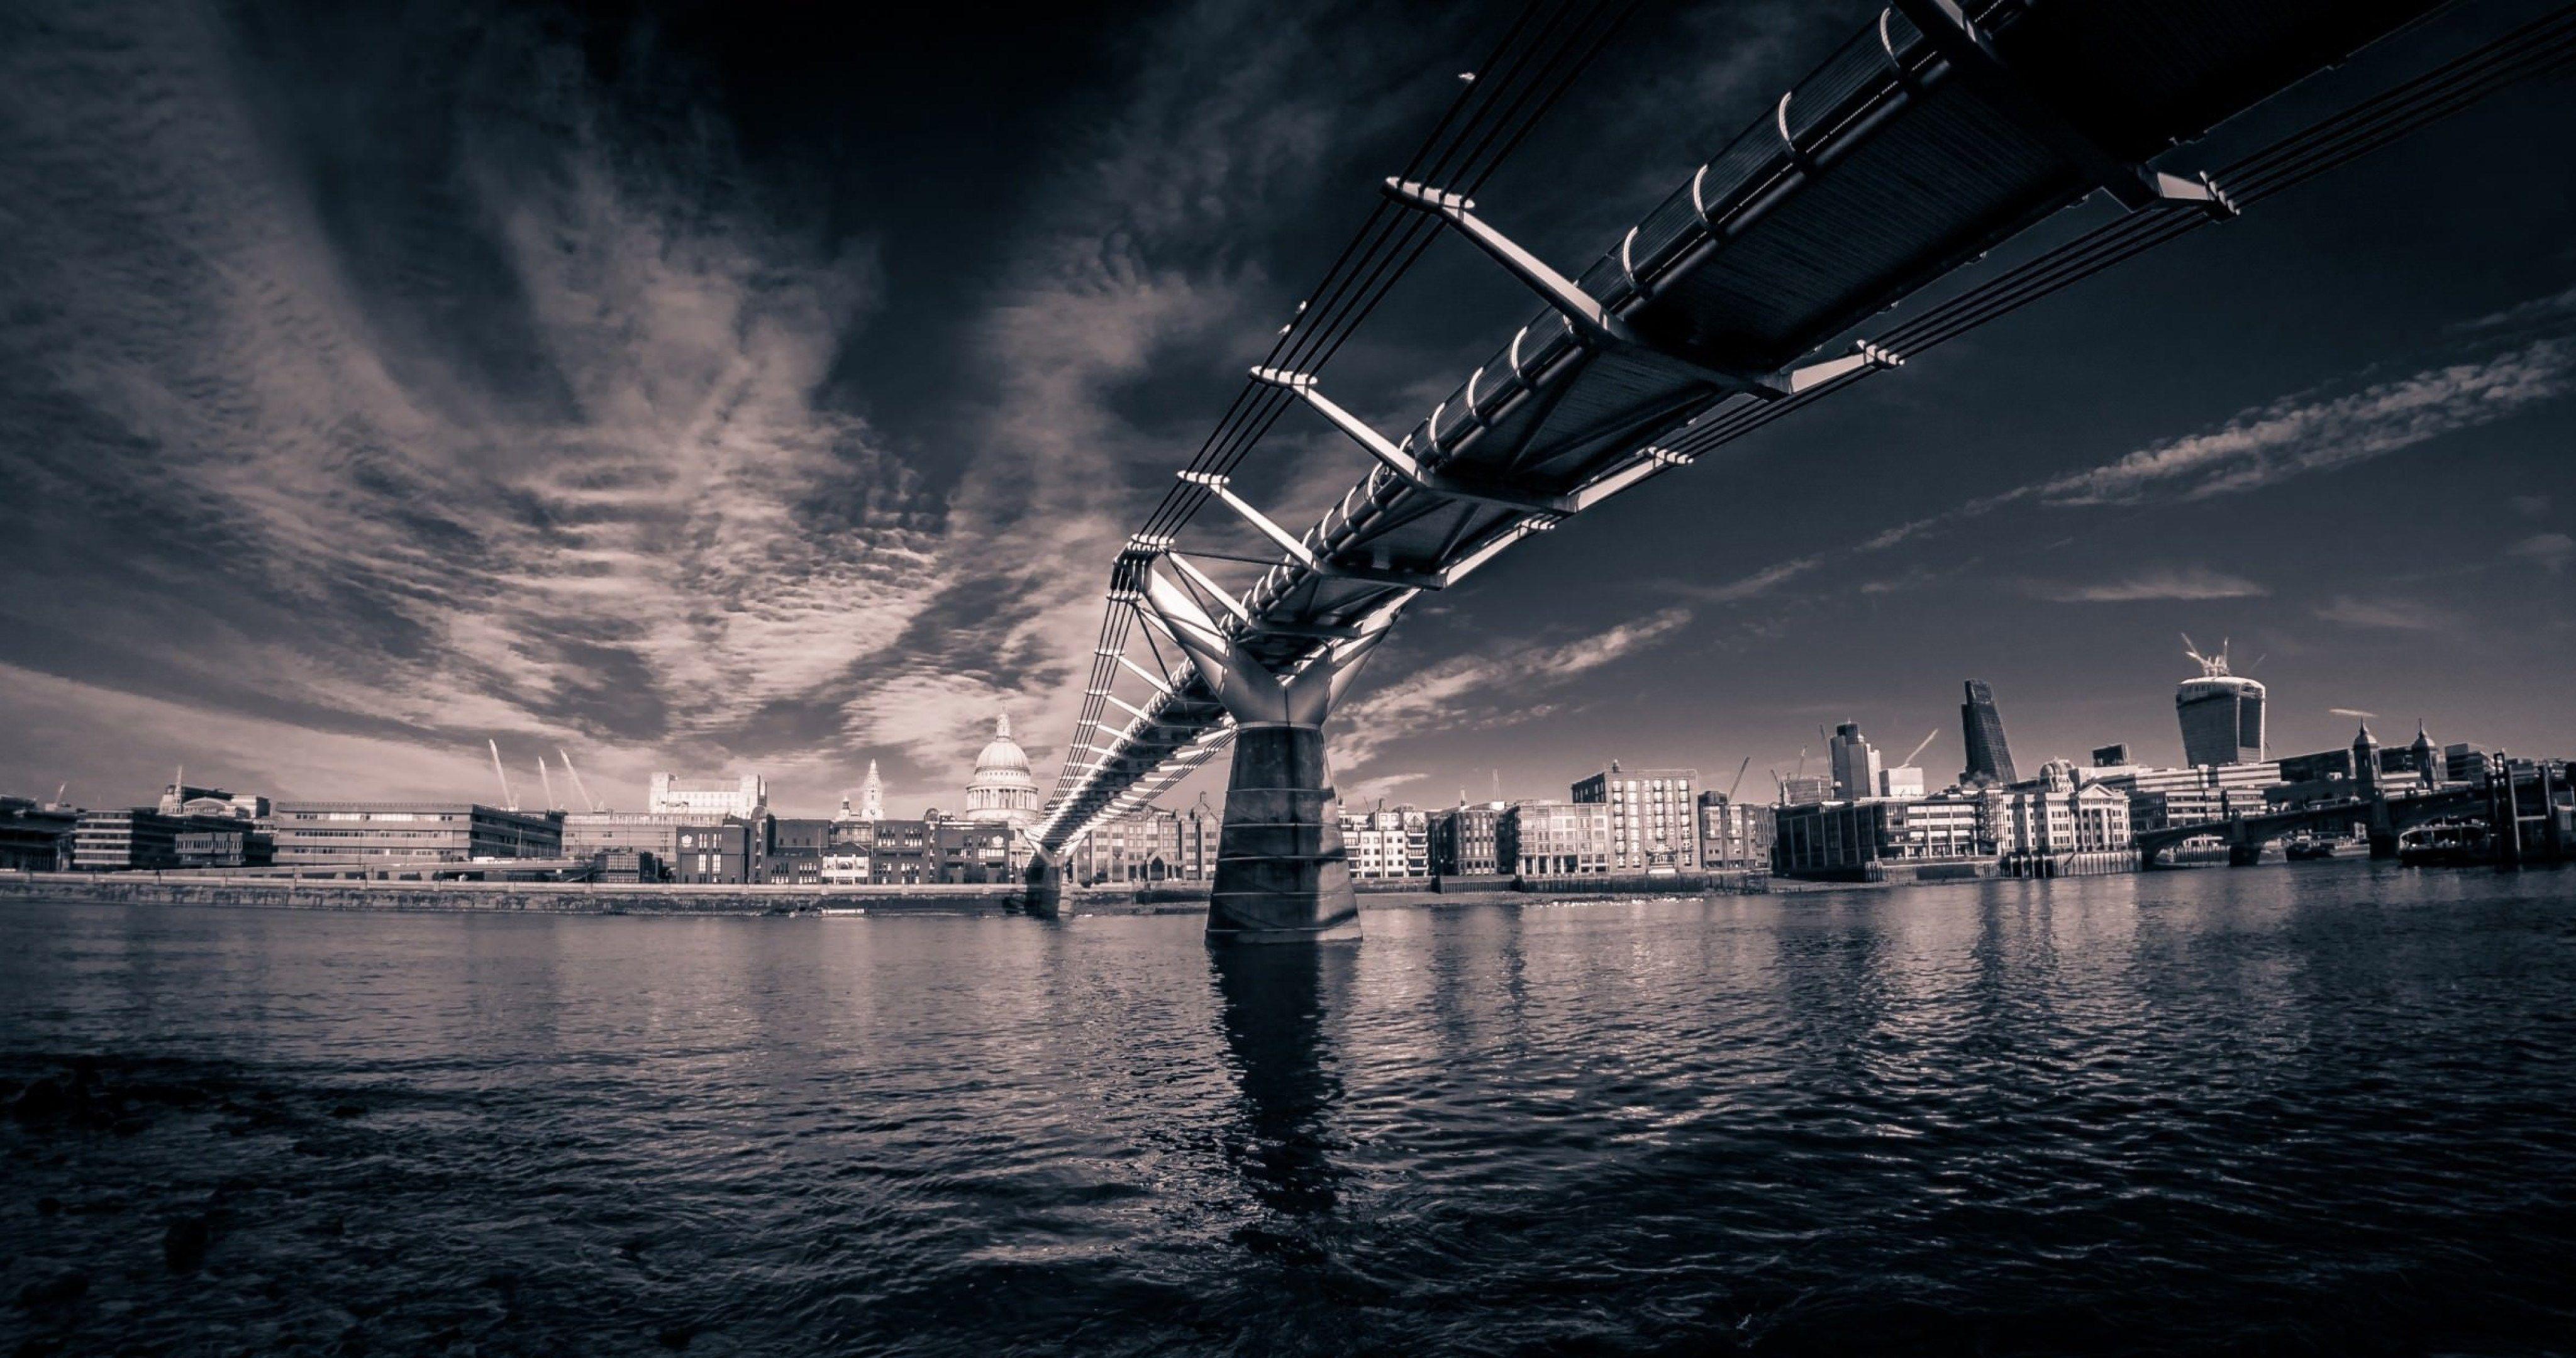 millenium bridge thames london 4k ultra HD wallpaper. London wallpaper, Millennium bridge london, Millennium bridge